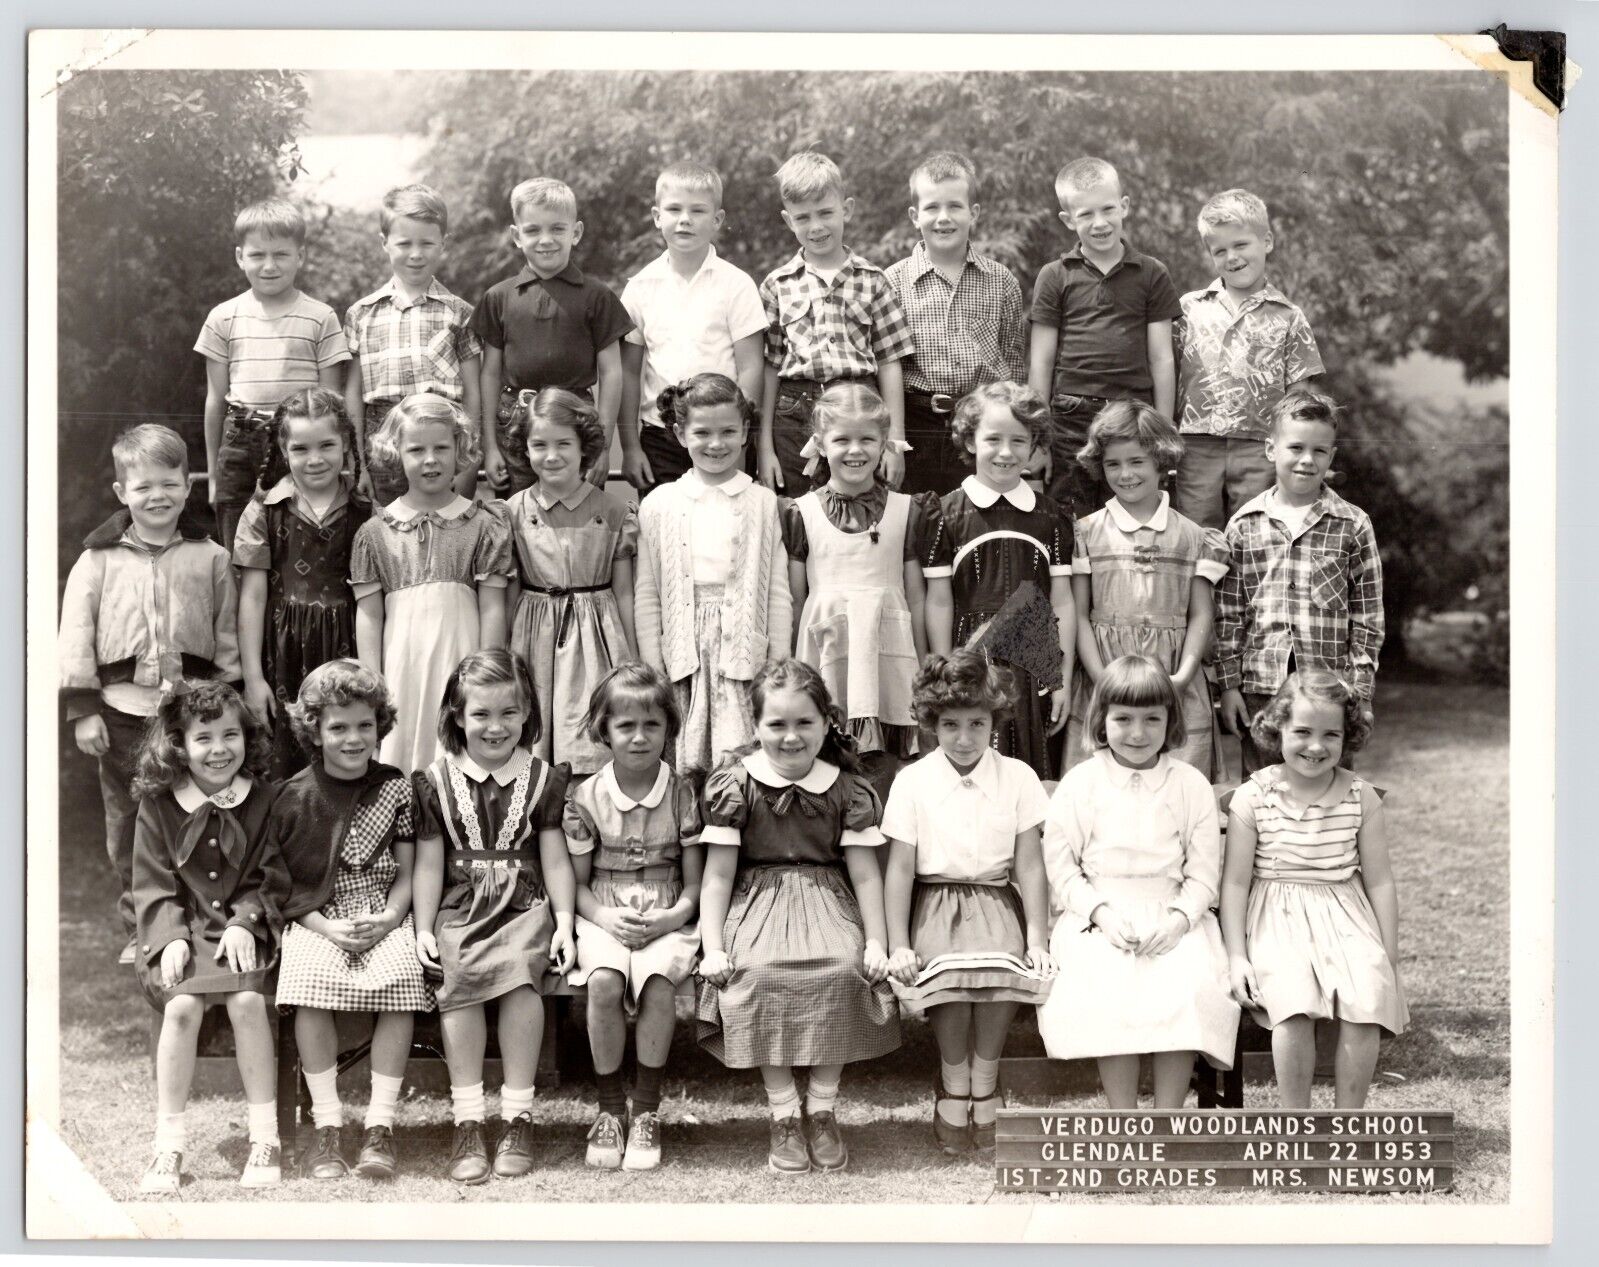 1953 Verdugo Woodlands Elementary School Glendale CA 1st-2nd Grade Class Photo